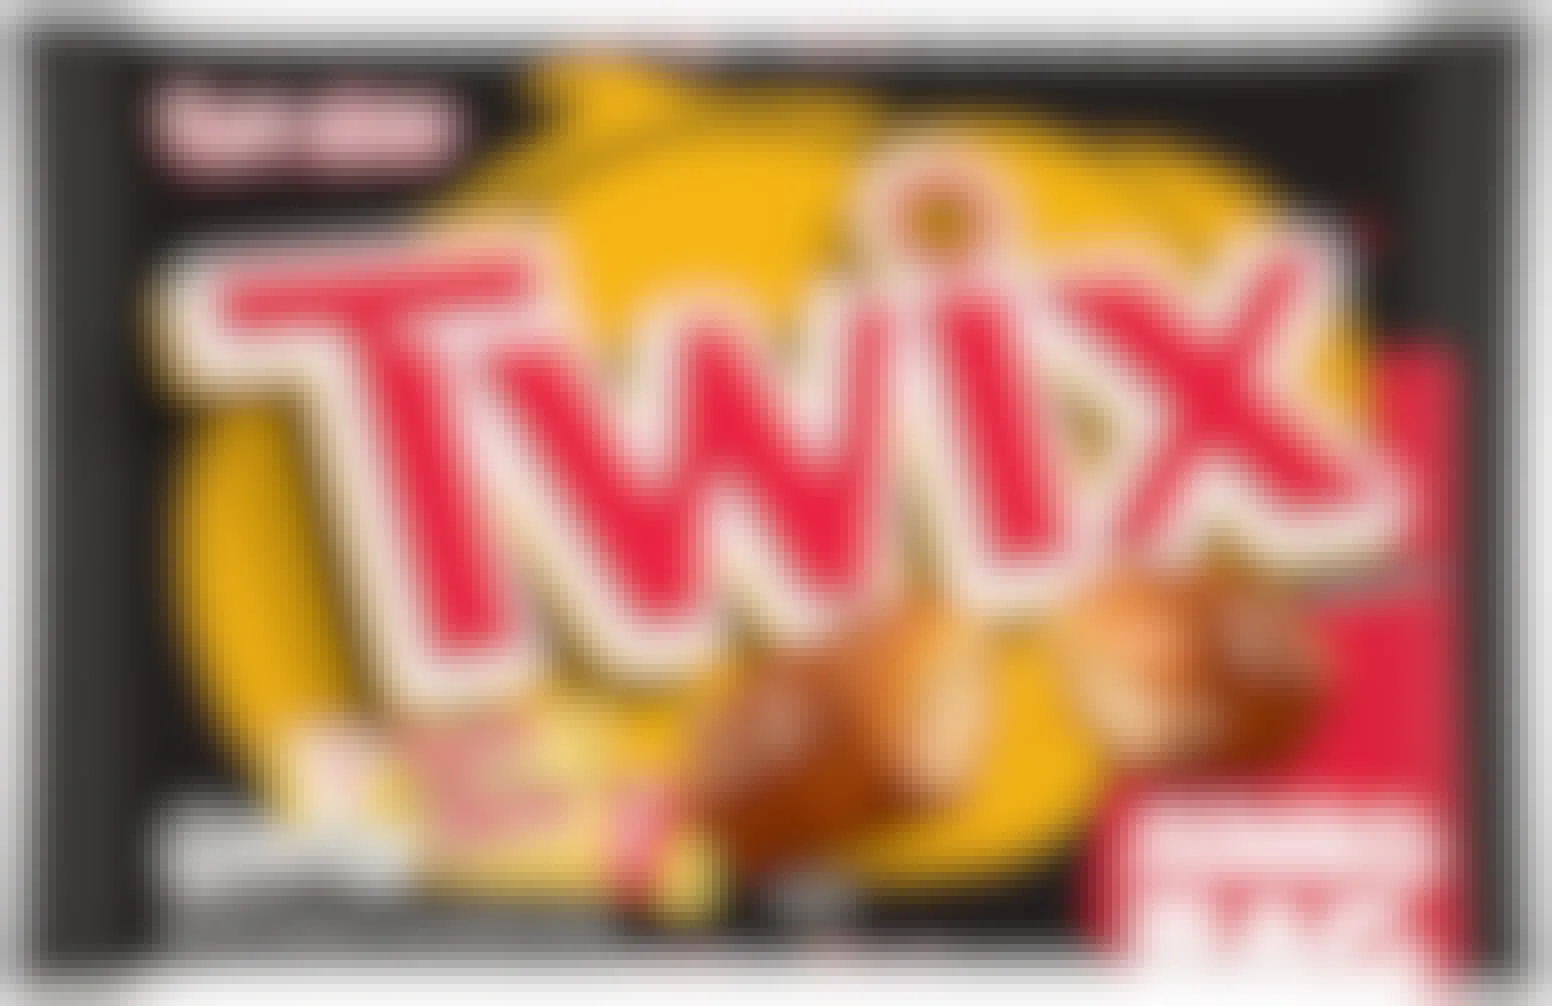 Twix fun size candy bar bag